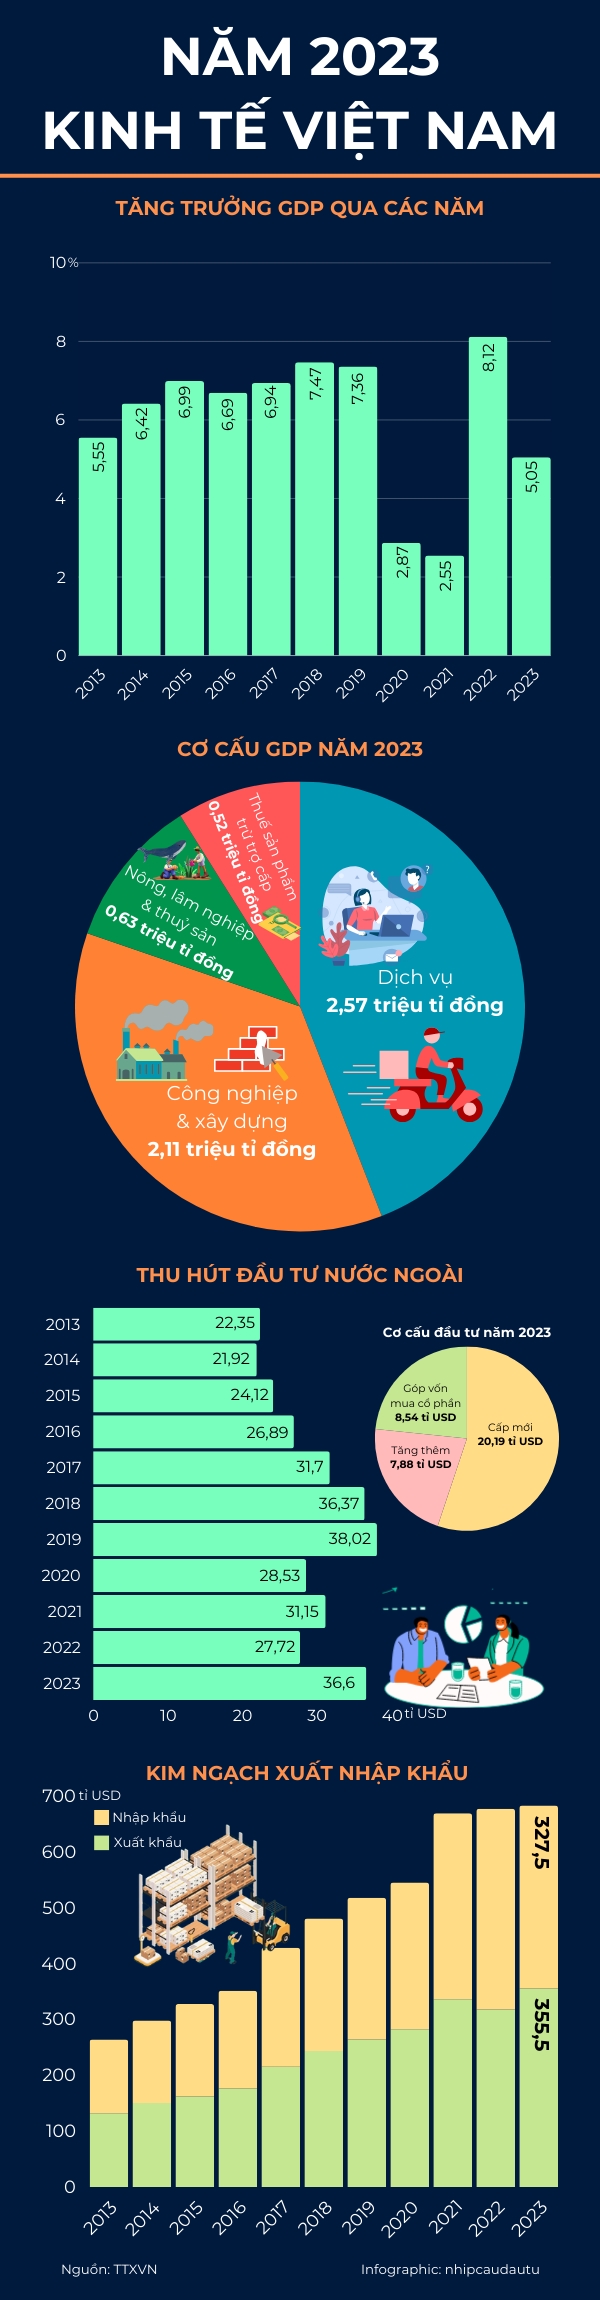 [Infographic] Kinh te Viet Nam nam 2023